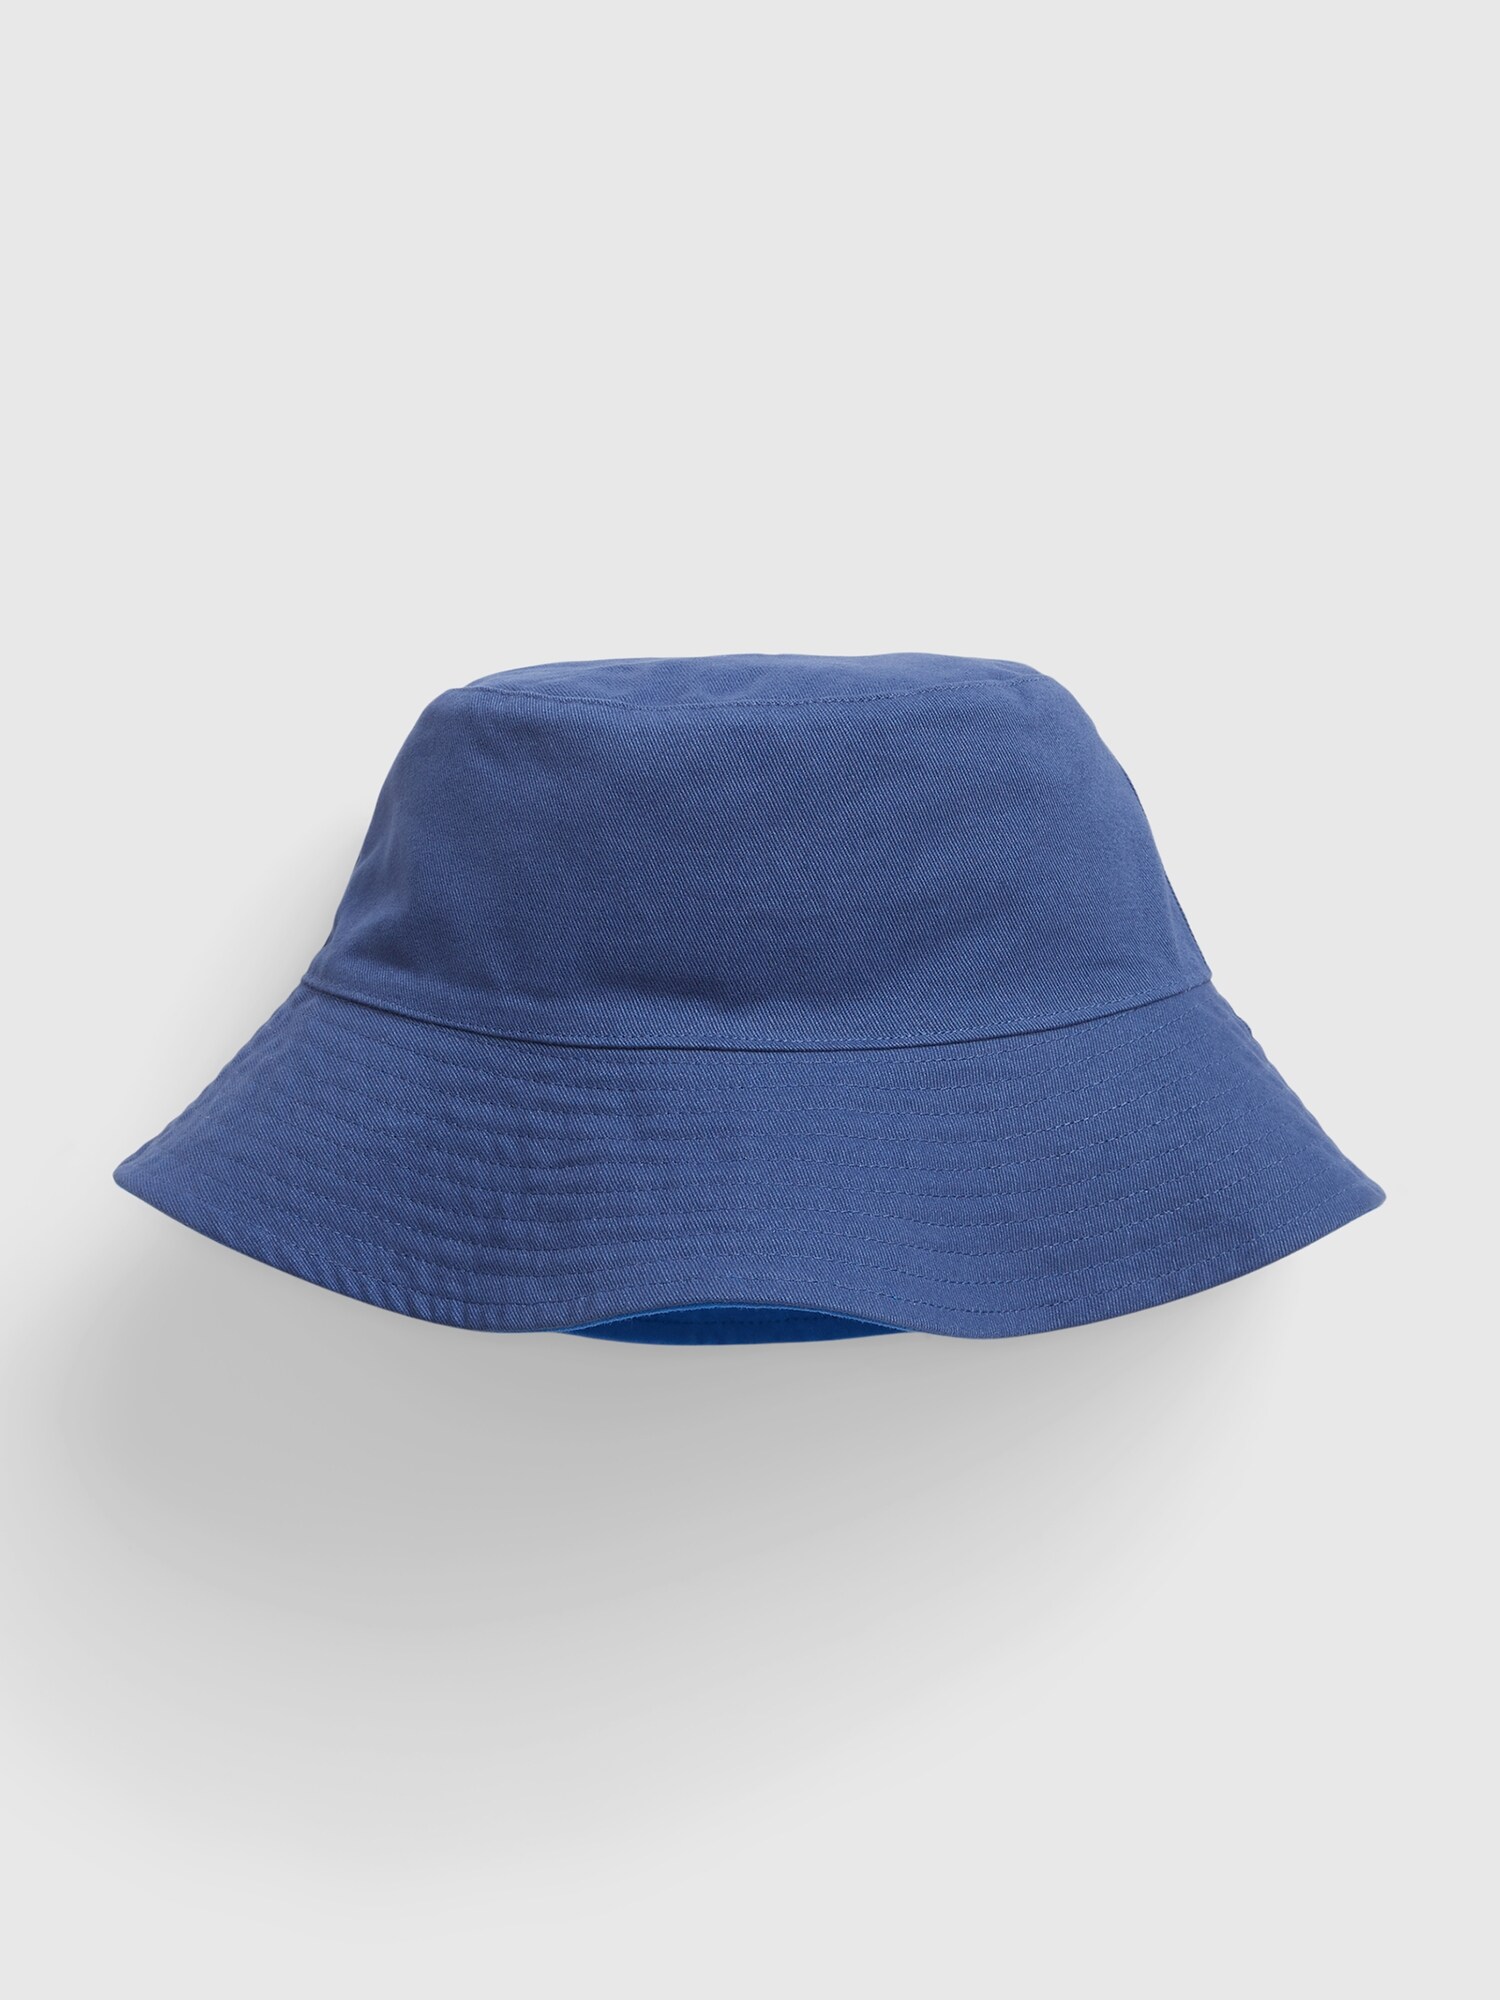 P72 バケットハット 定価2,990円 オーガニックコットン 薄青 59㎝ - 帽子